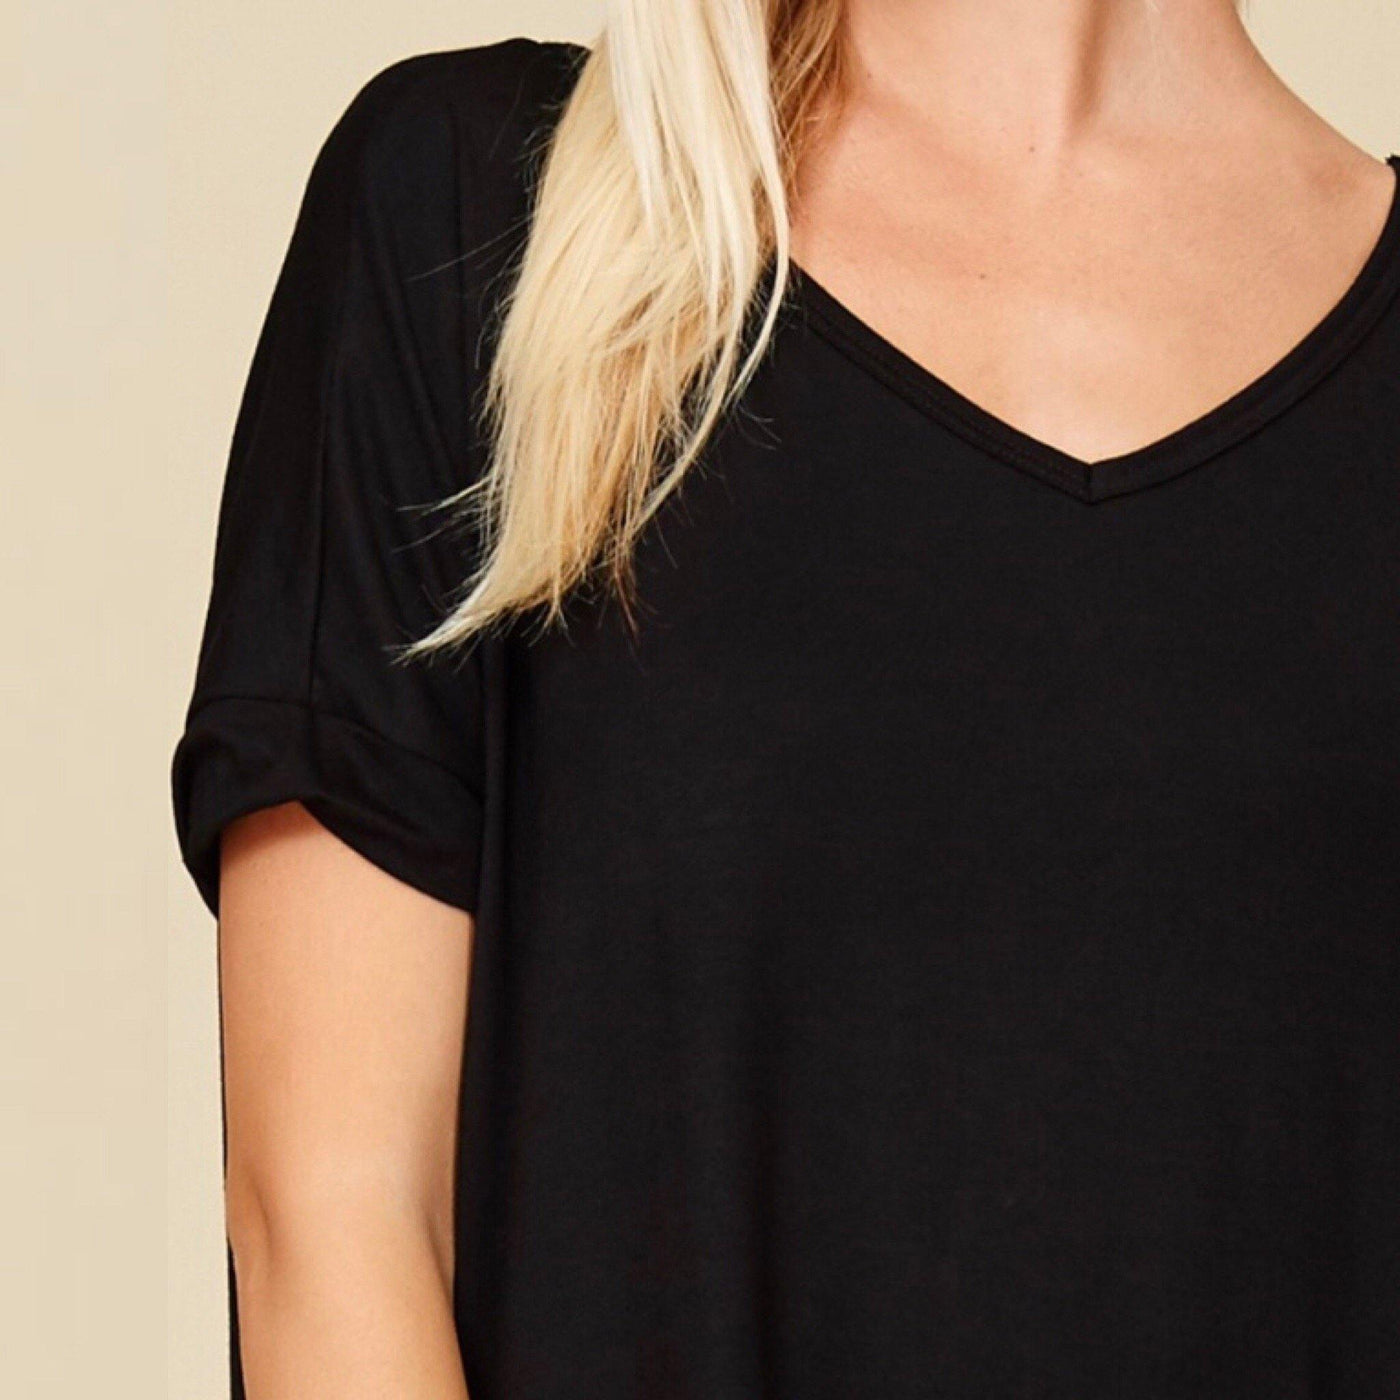 Casual Black Short Sleeve T-Shirt Maxi Dress - Dress - dalia + jade 